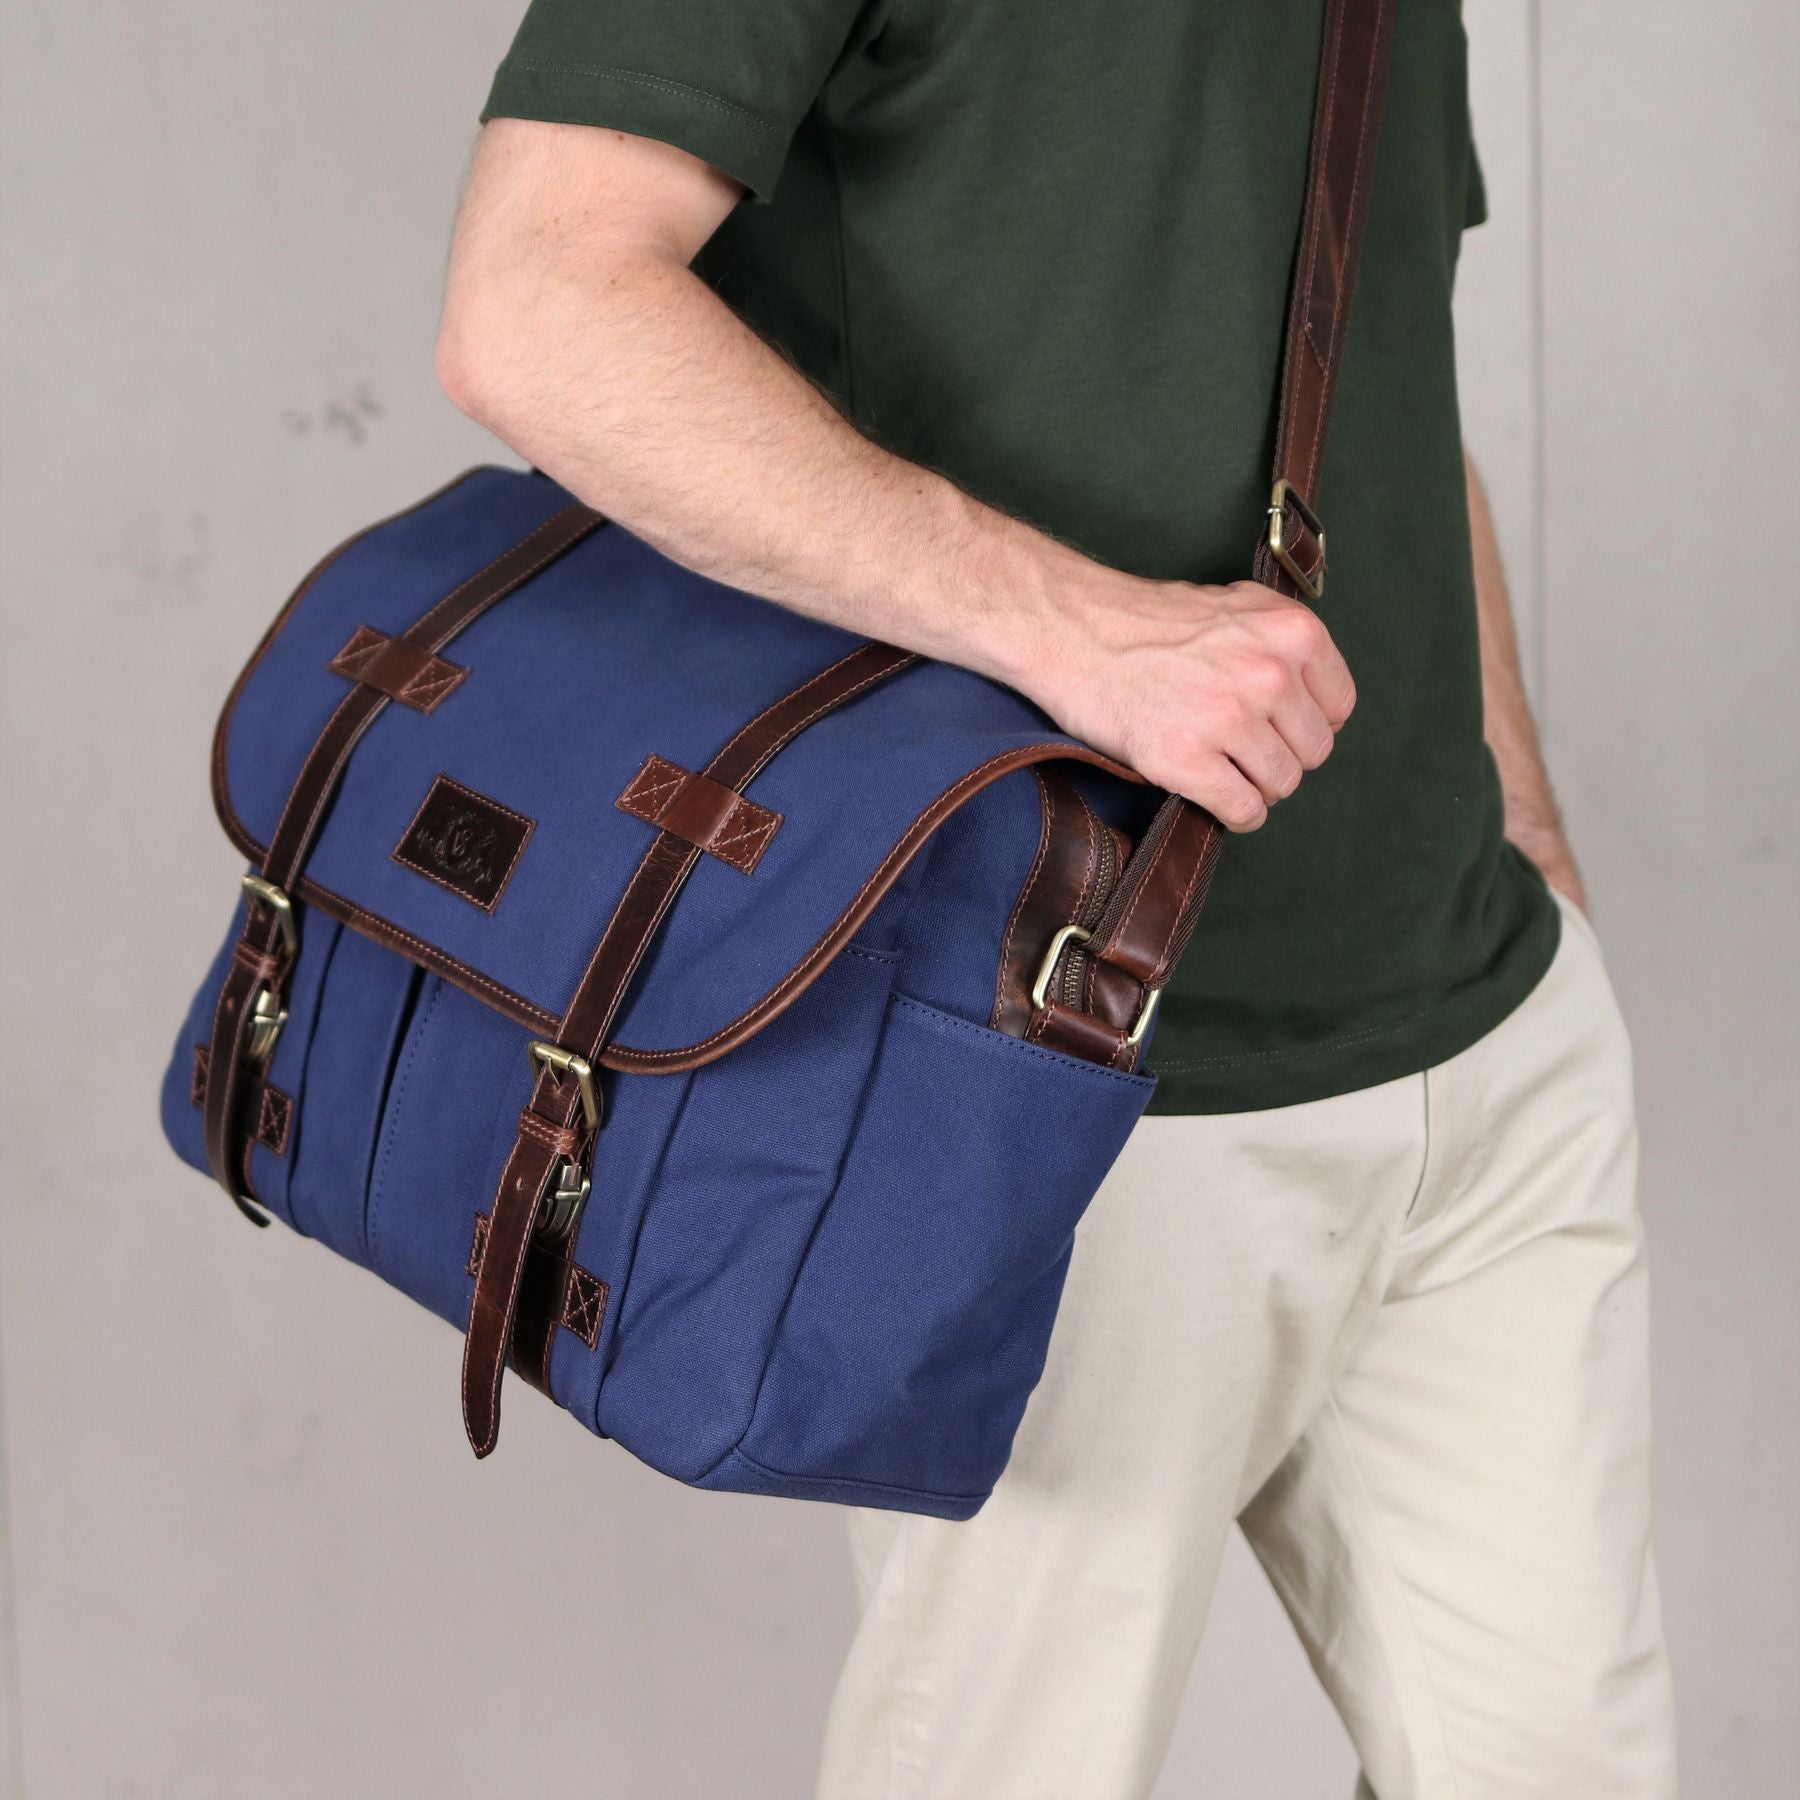 SID & VAIN Messenger bag CHASE Canvas&Leder blau-braun Laptoptasche Messenger bag